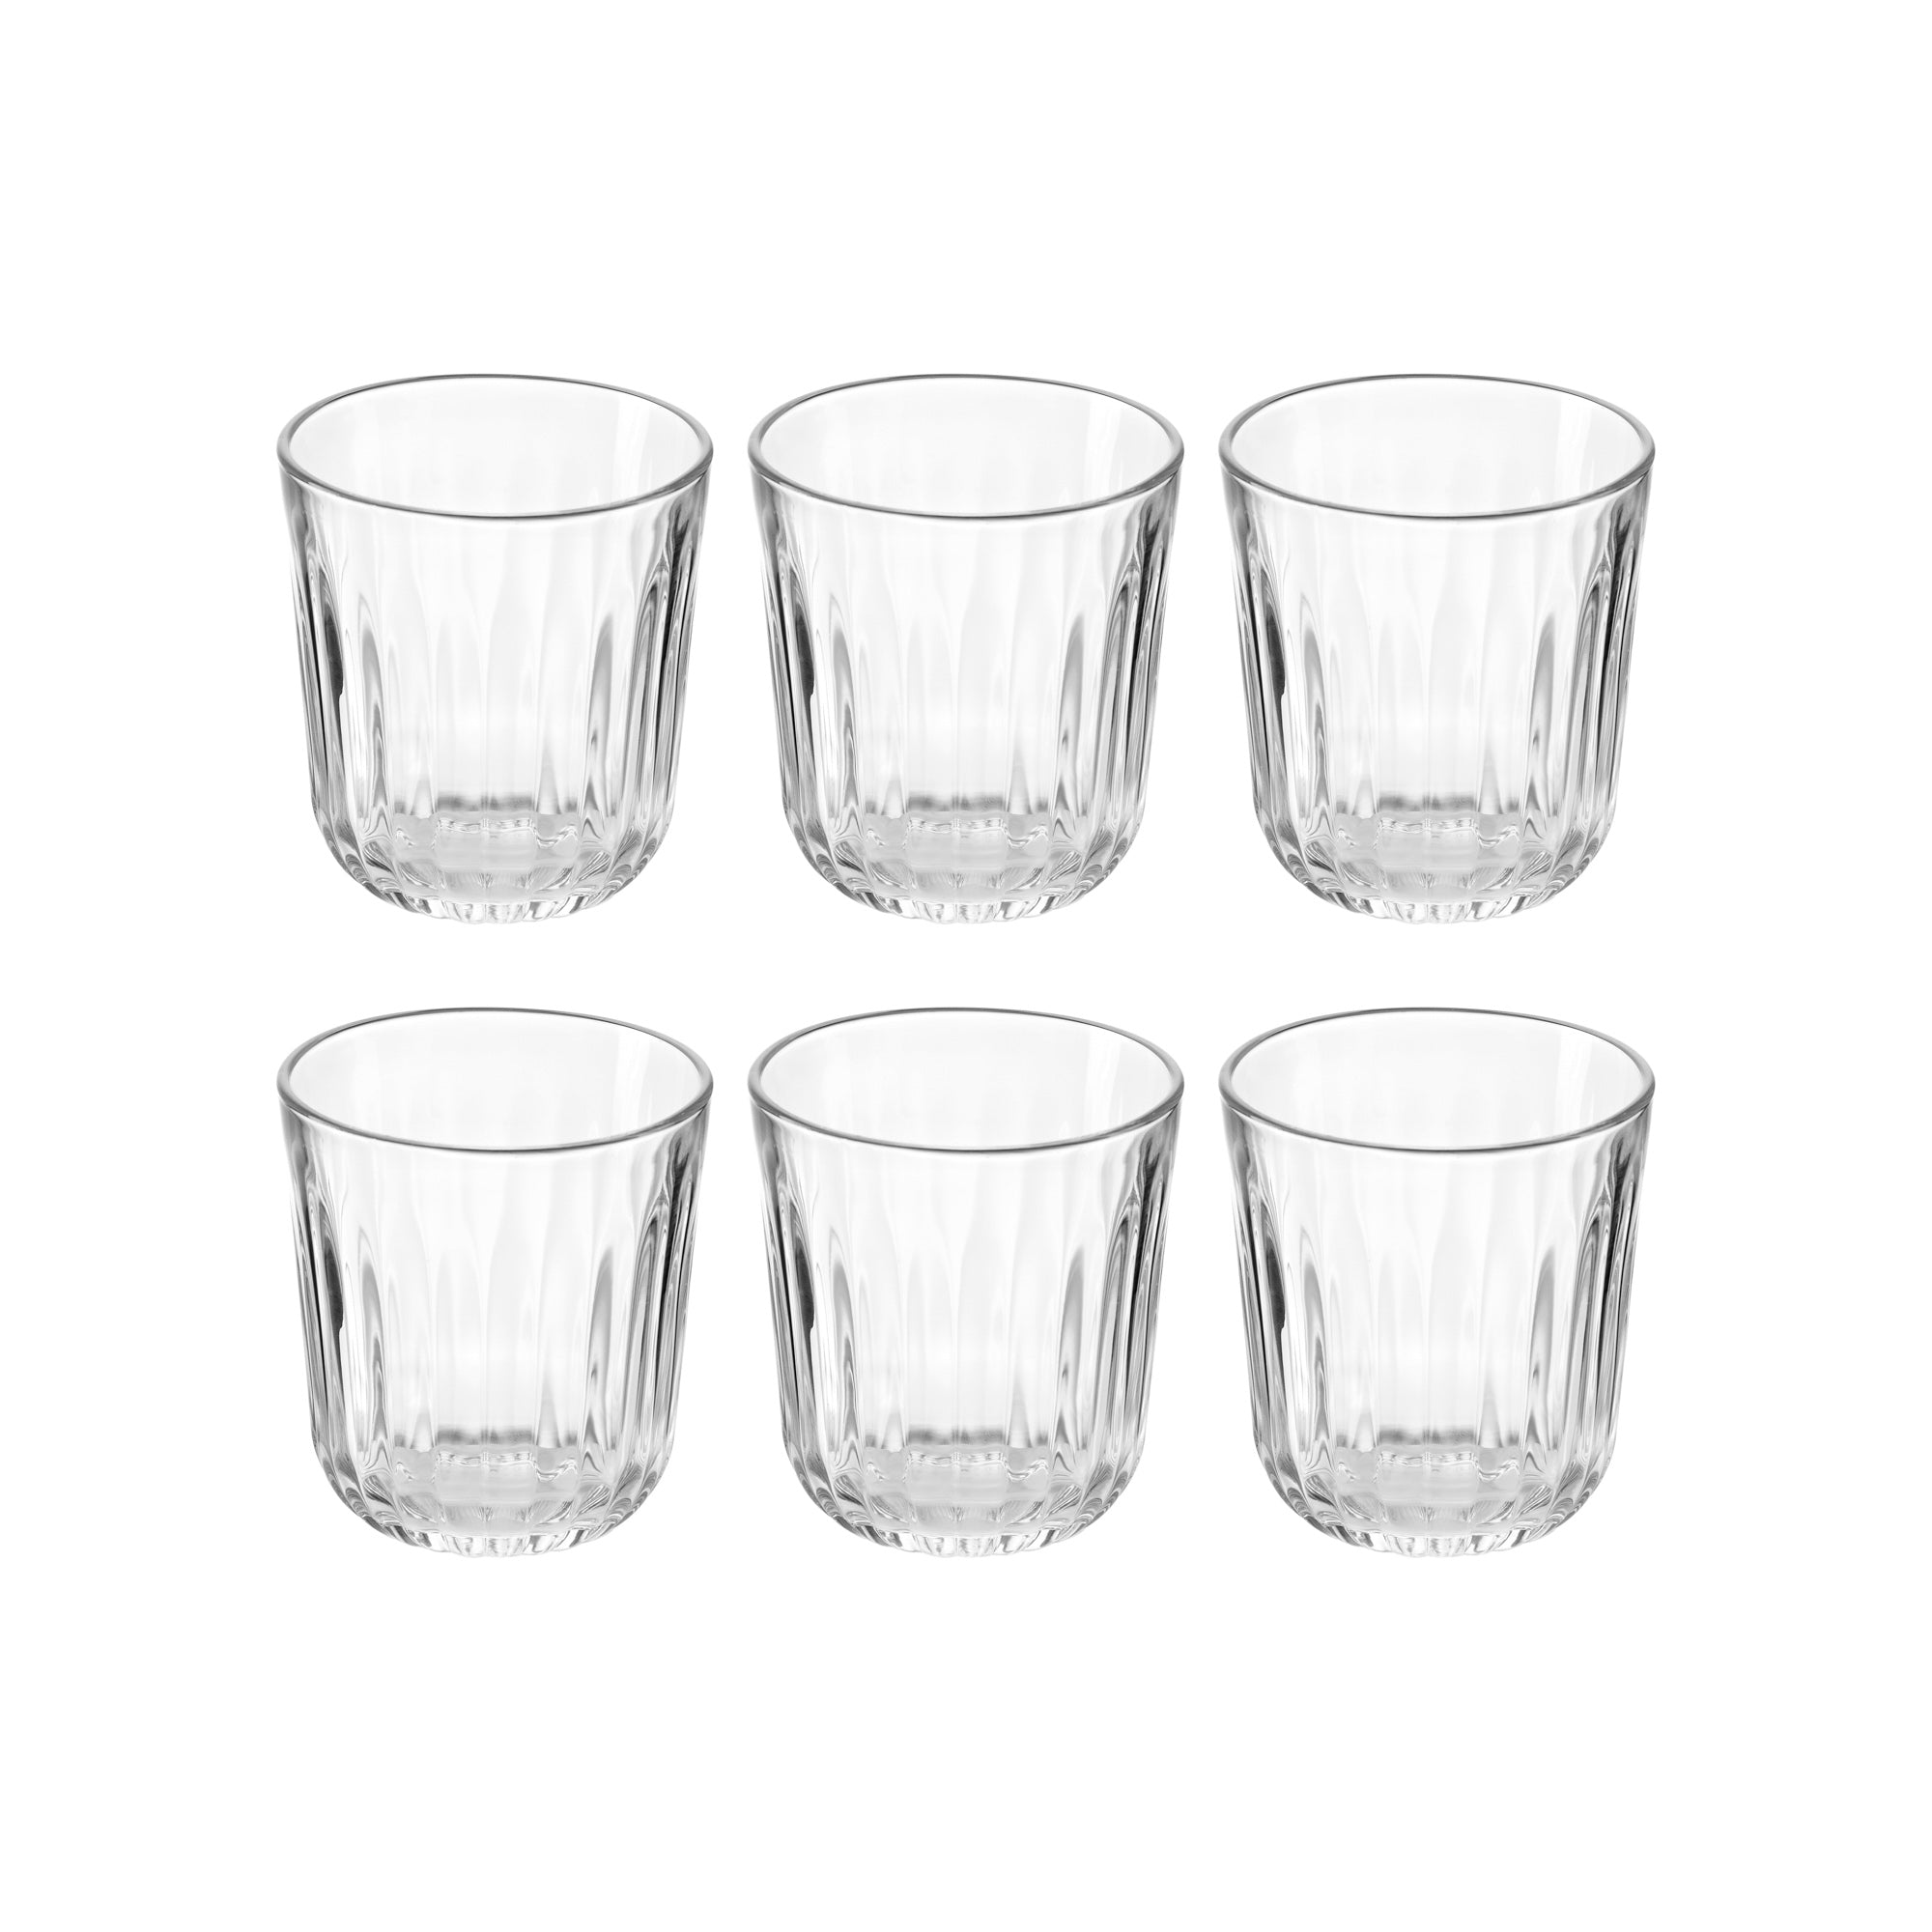 SET OF 6 GLASSES "EVERYDAY"